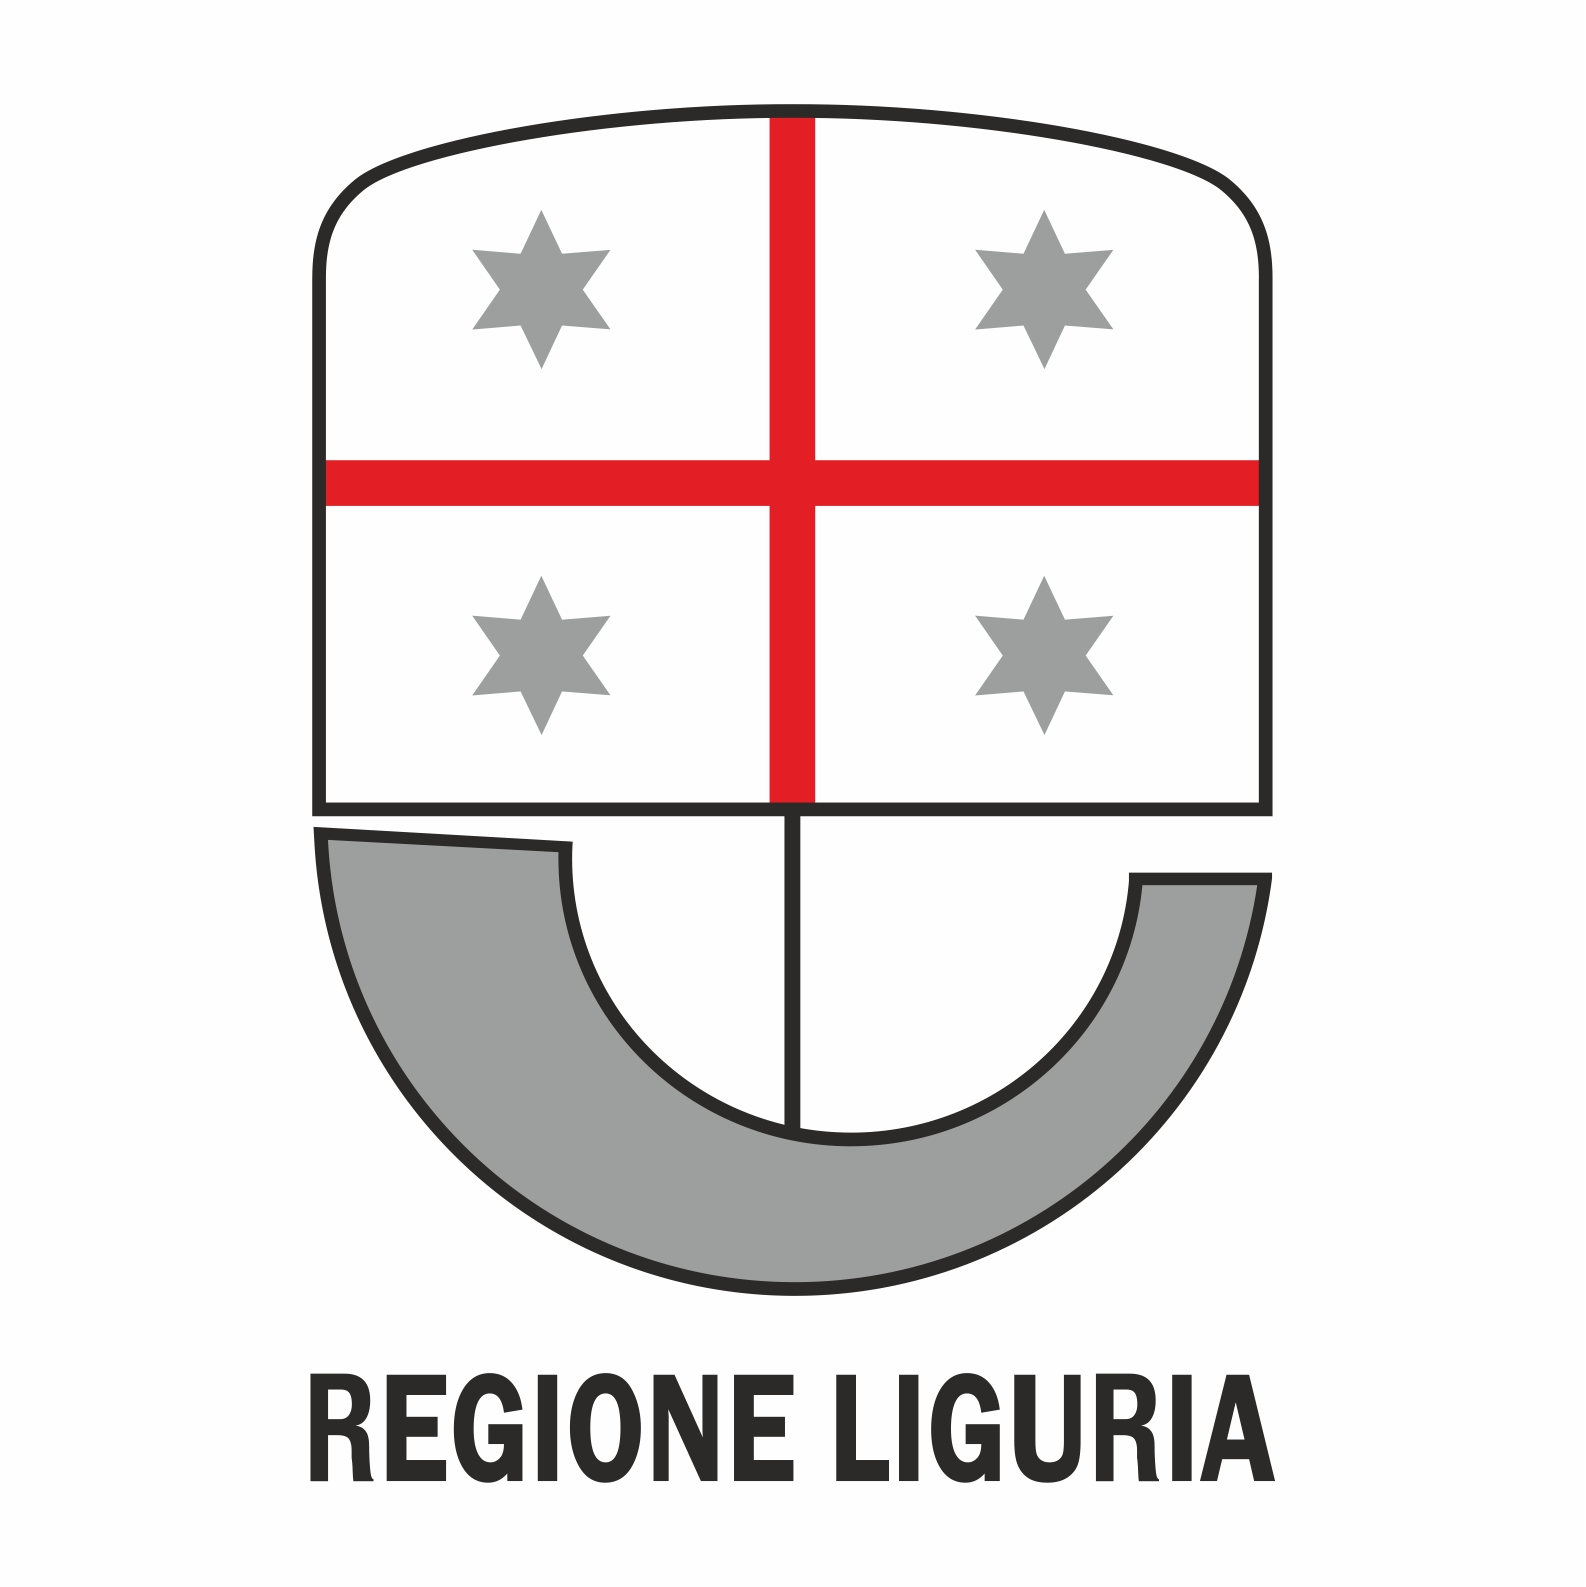 Liguria (IT)